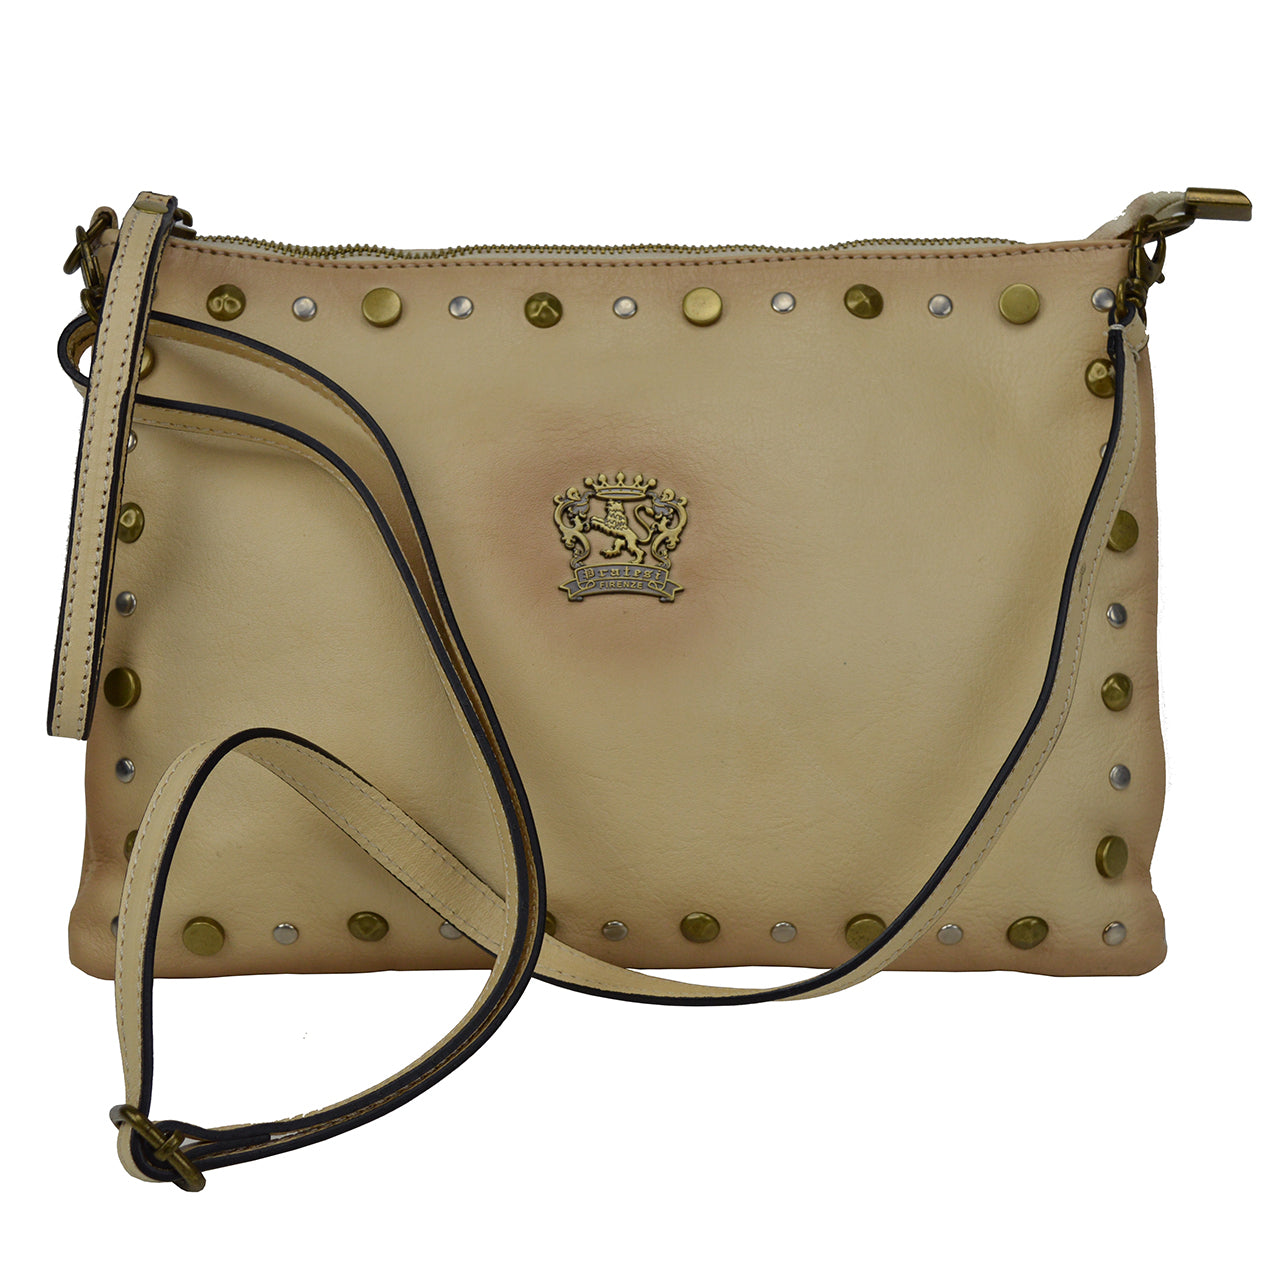 Pratesi Montebonello B456 Woman Bag in genuine Italian leather